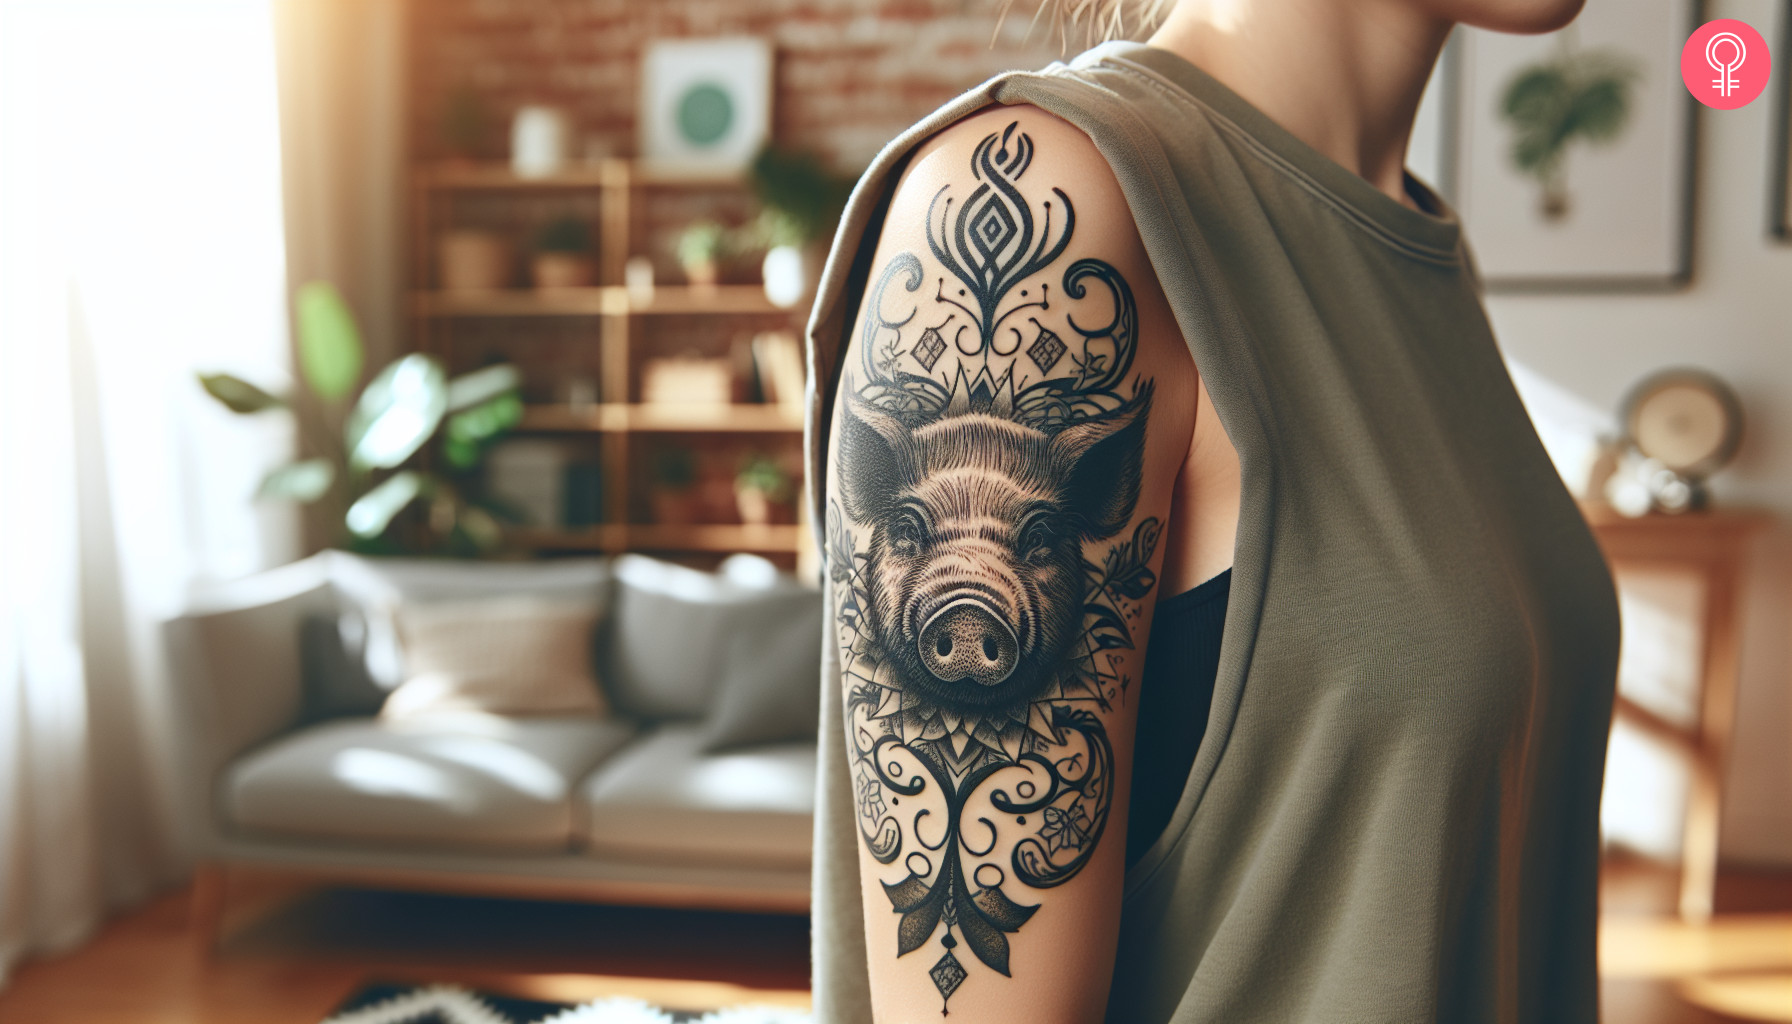 A tattoo of a zodiac pig on a woman’s arm